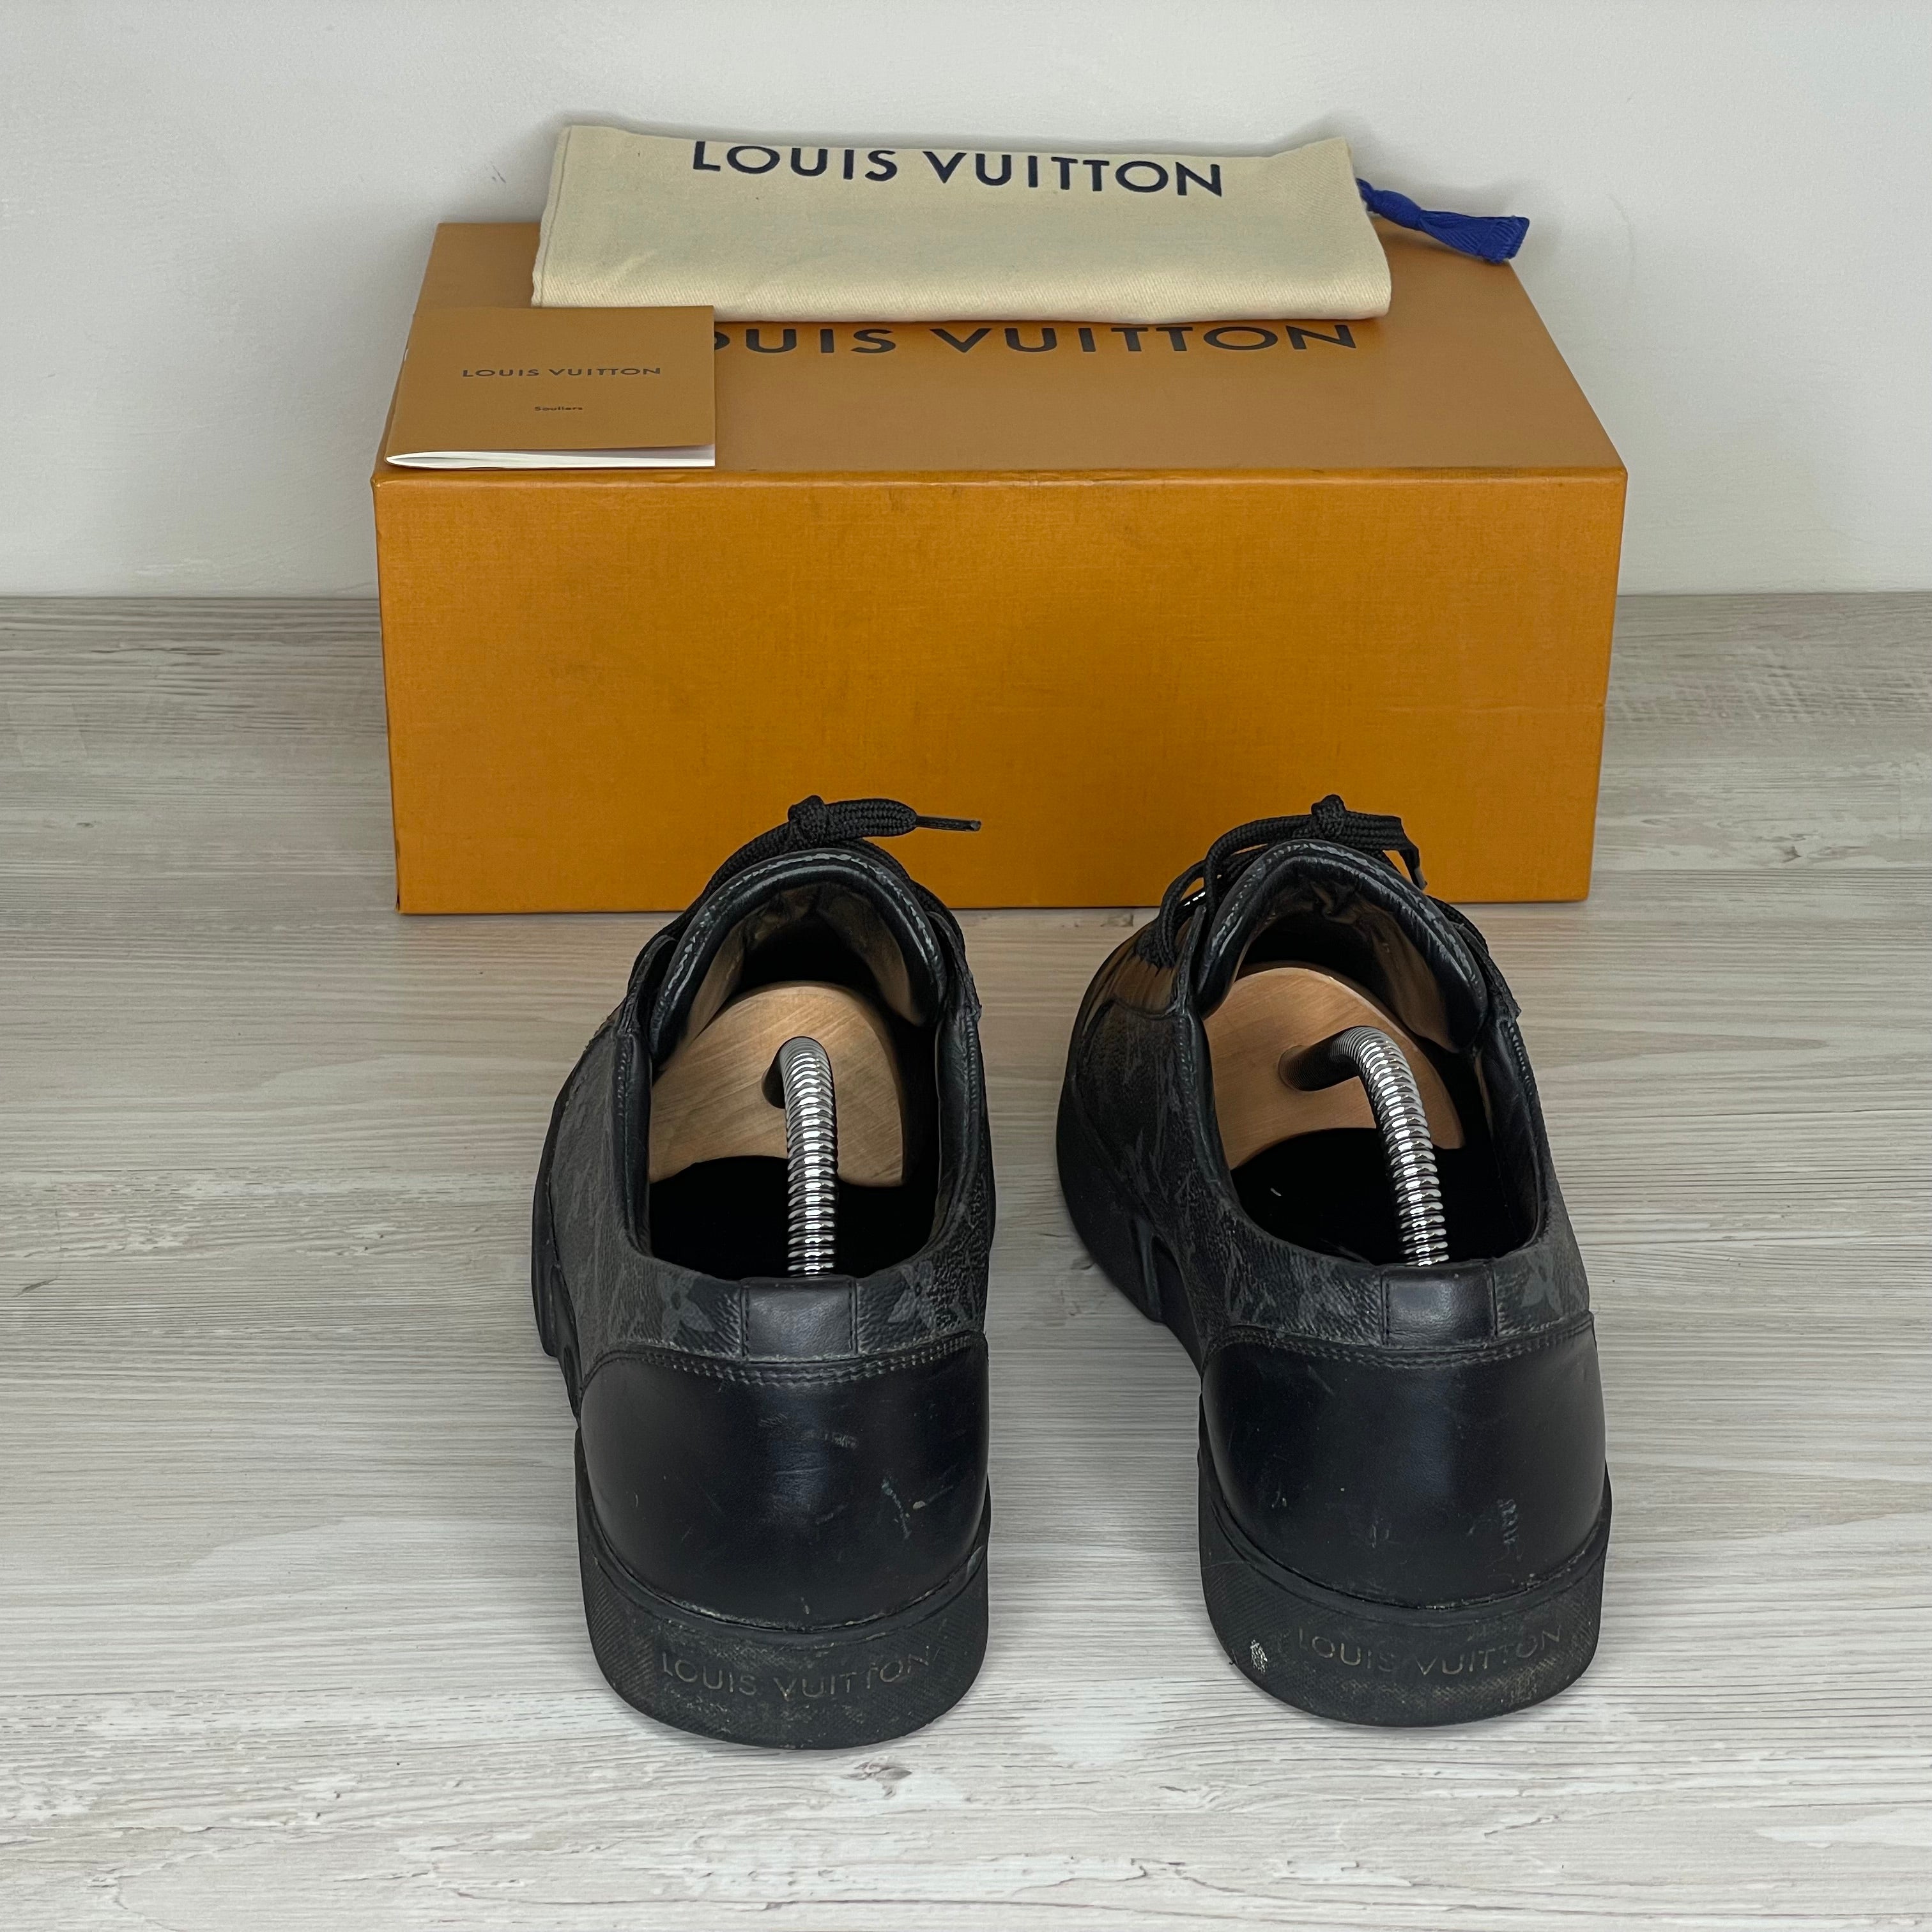 Louis Vuitton Sneakers, Herre 'Sort' Læder Canvas (40.5) ❗️